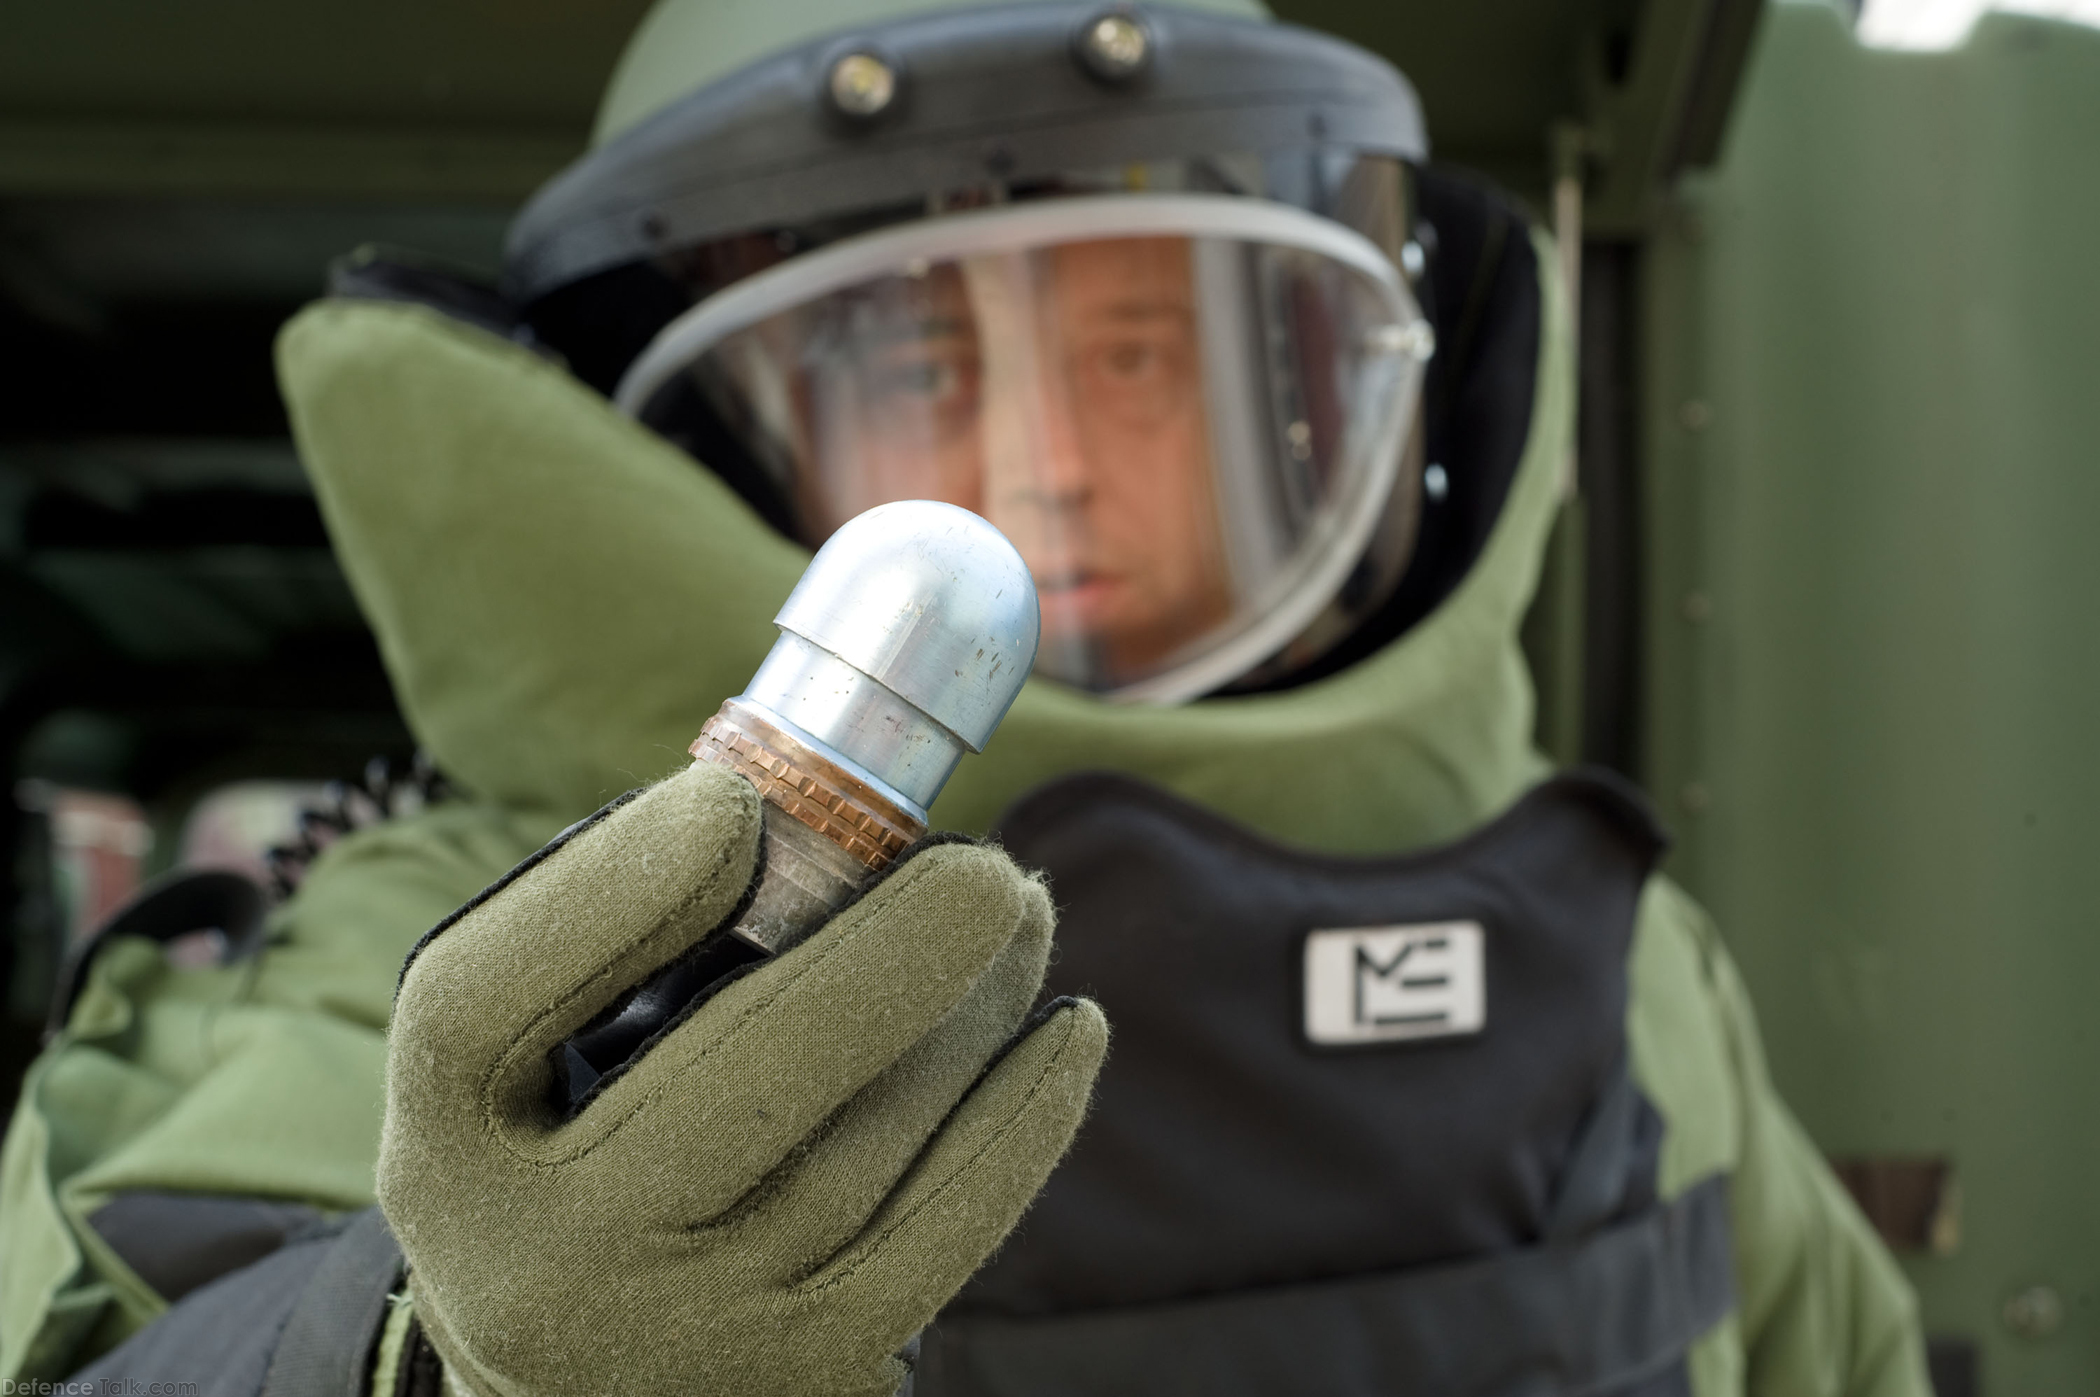 40mm Grenade, Explosive Ordnance Disposal Team